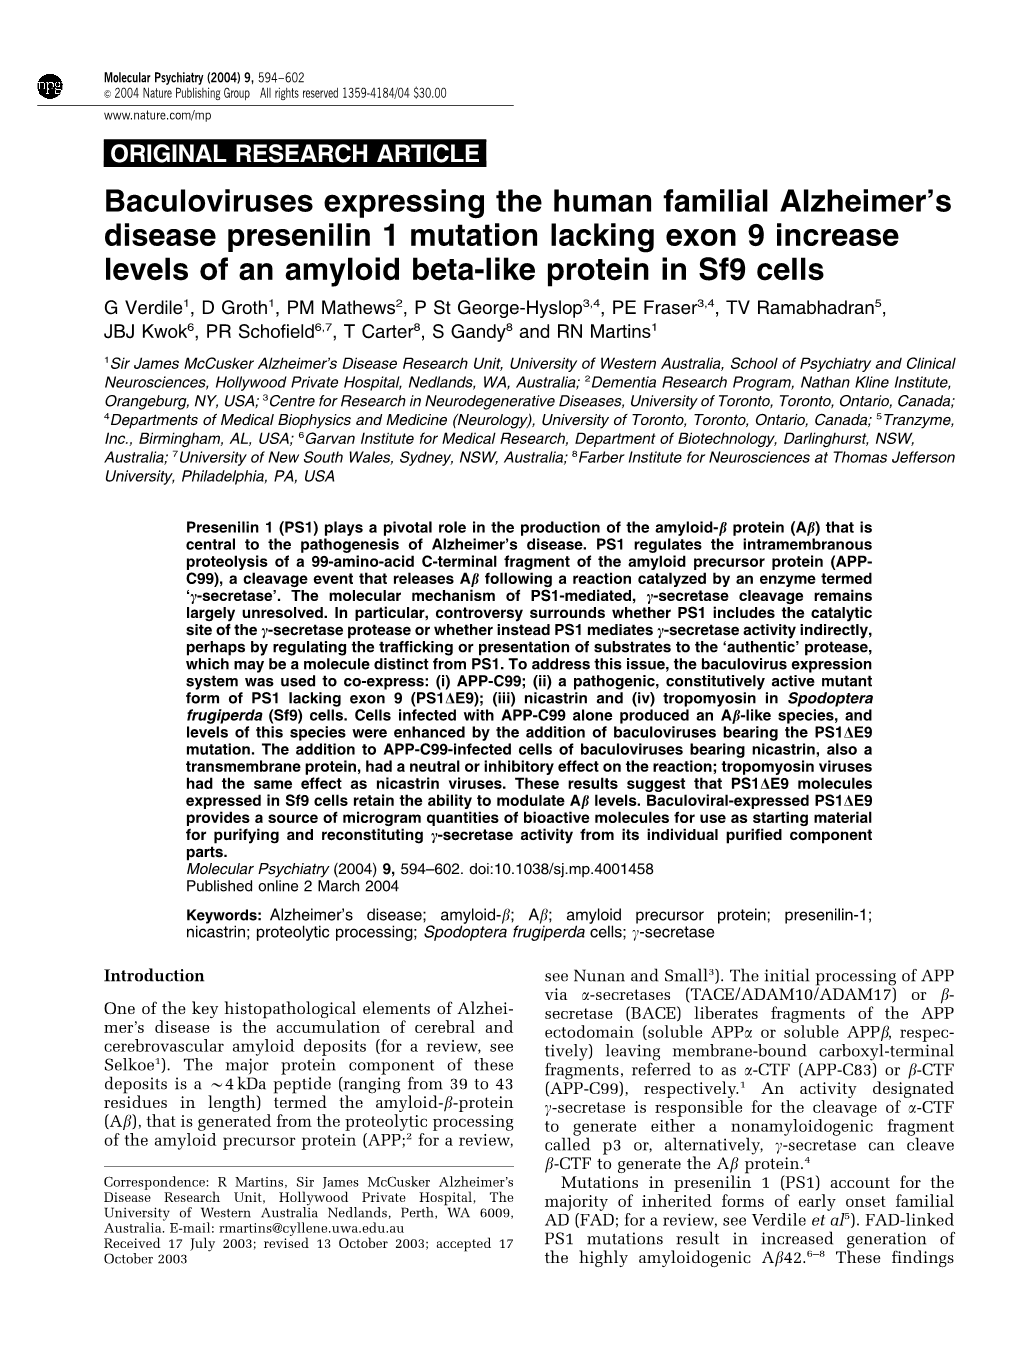 Baculoviruses Expressing the Human Familial Alzheimer's Disease